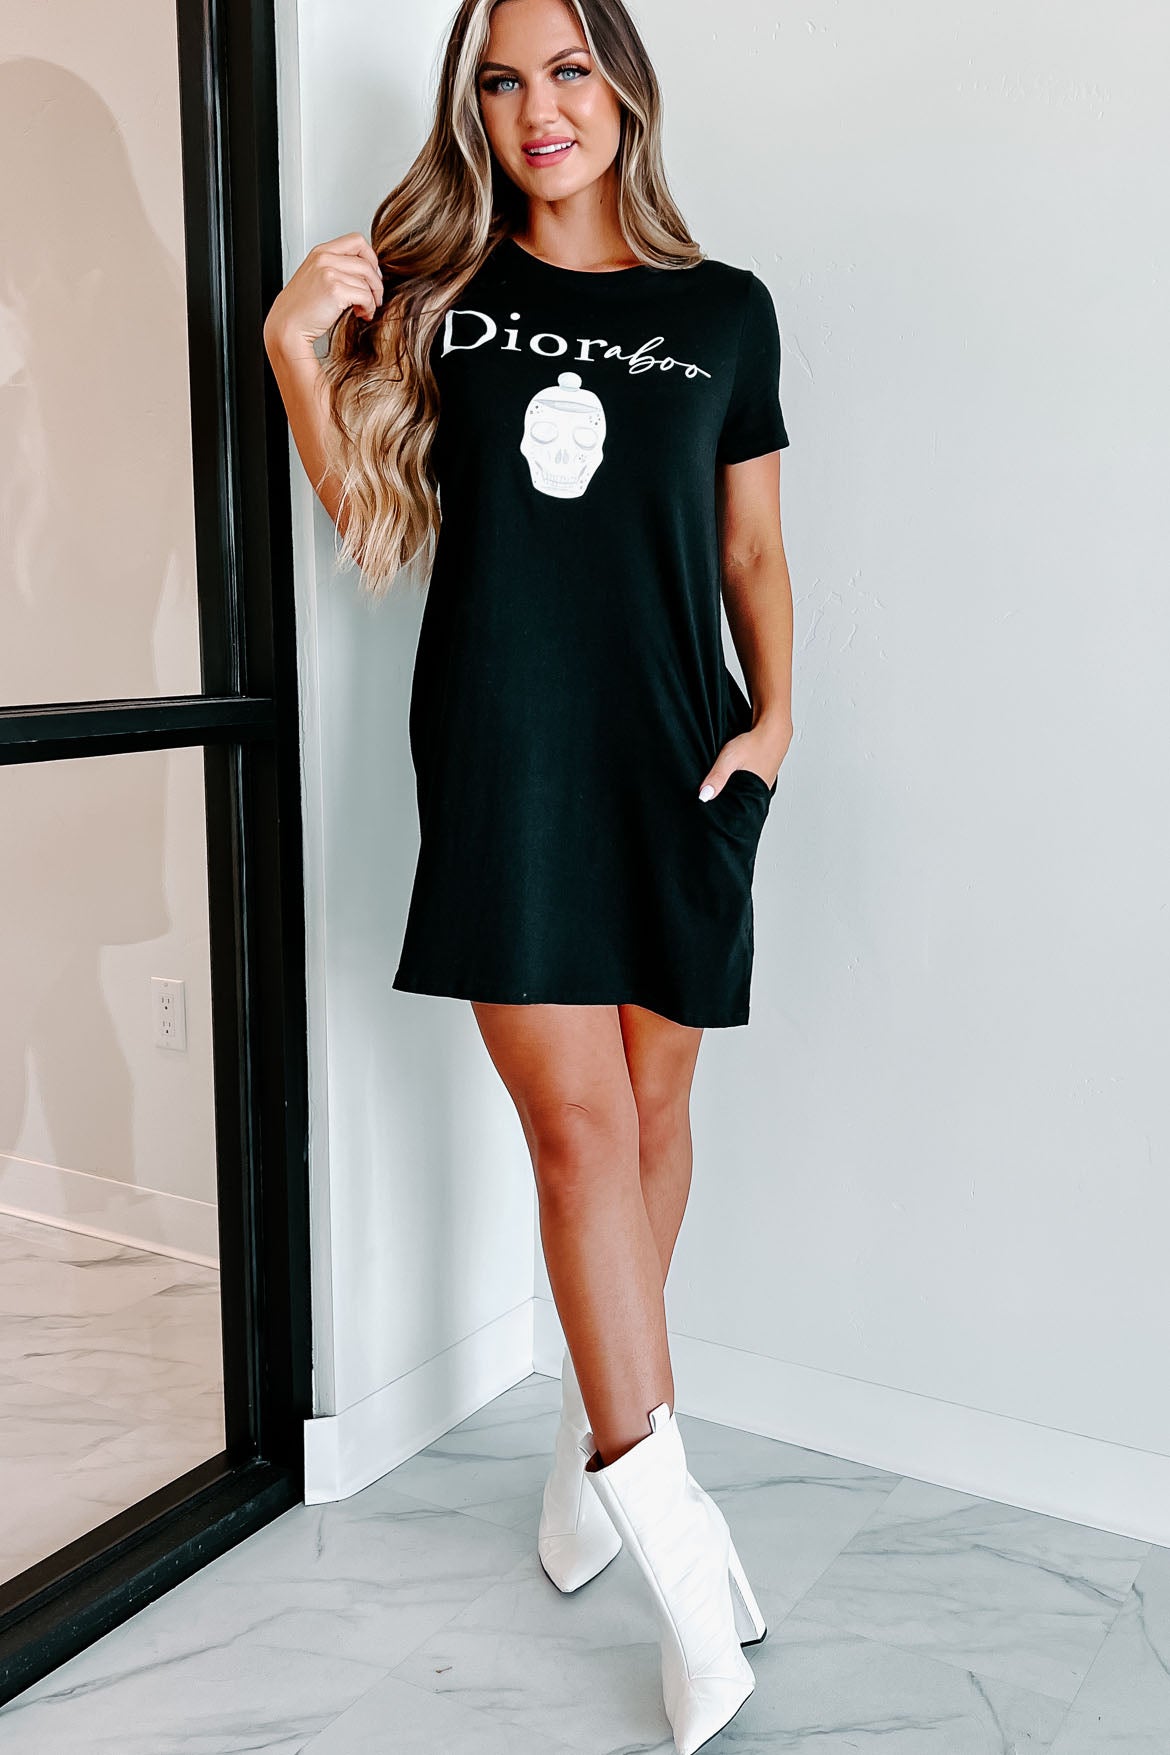 "Dioraboo" Graphic T-Shirt Dress (Black) - Print On Demand - NanaMacs